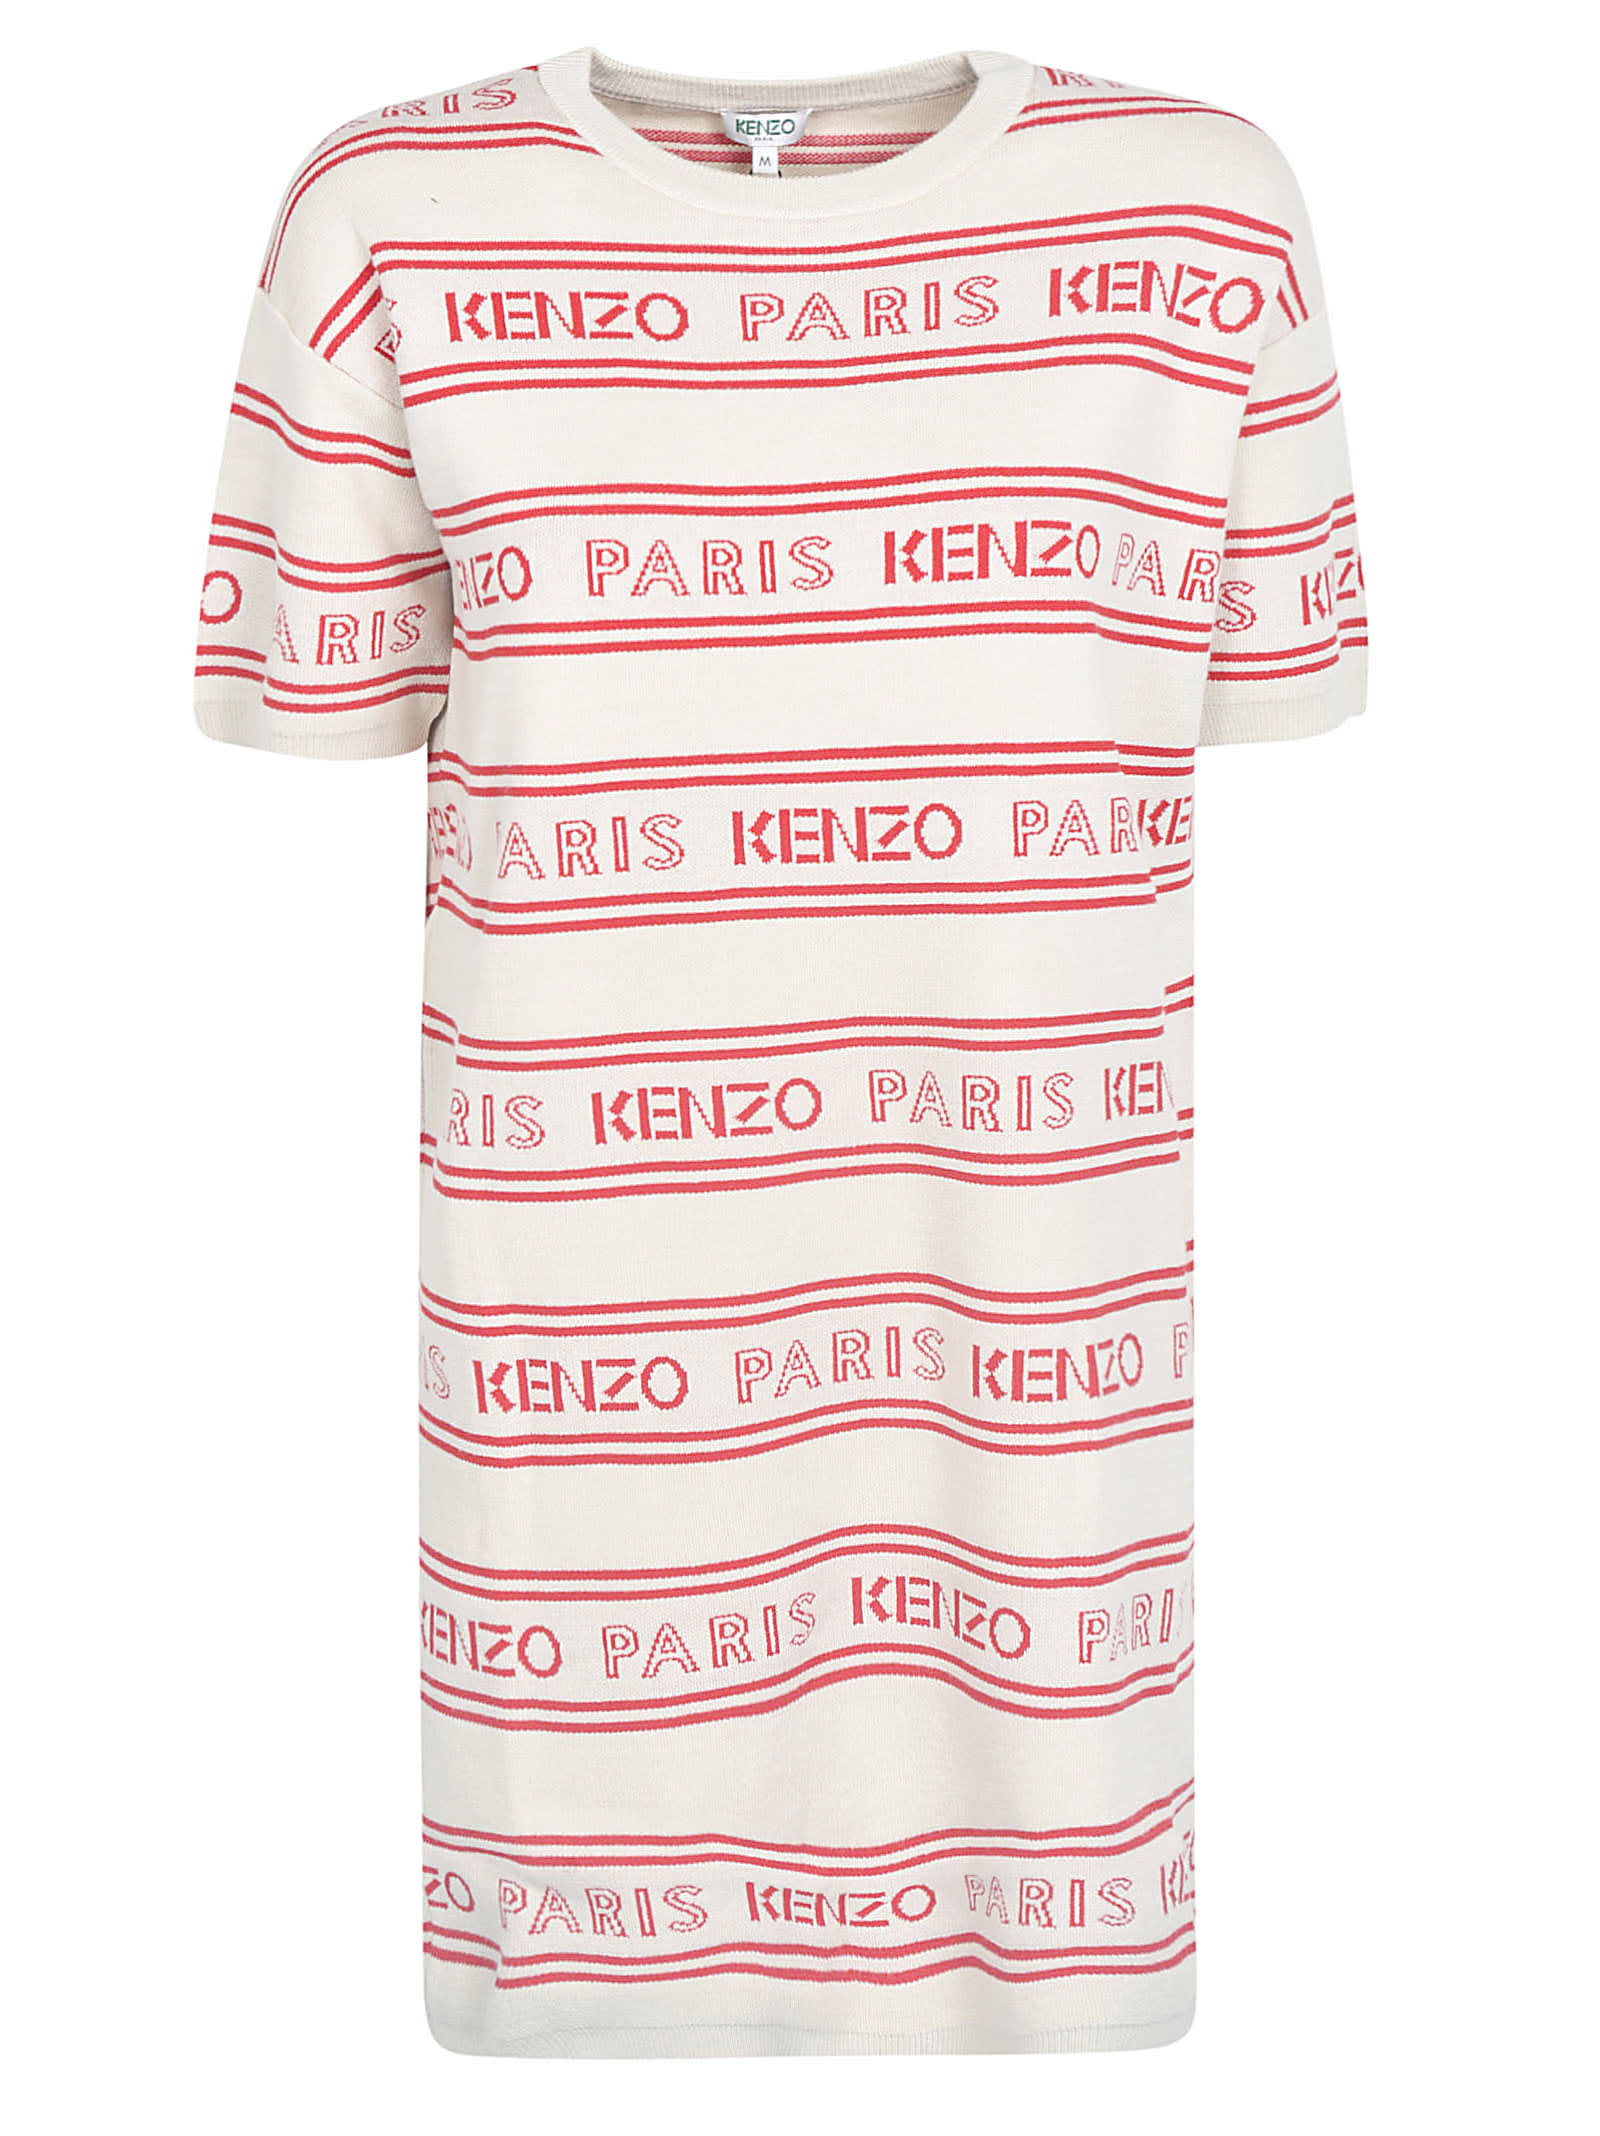 kenzo paris dress